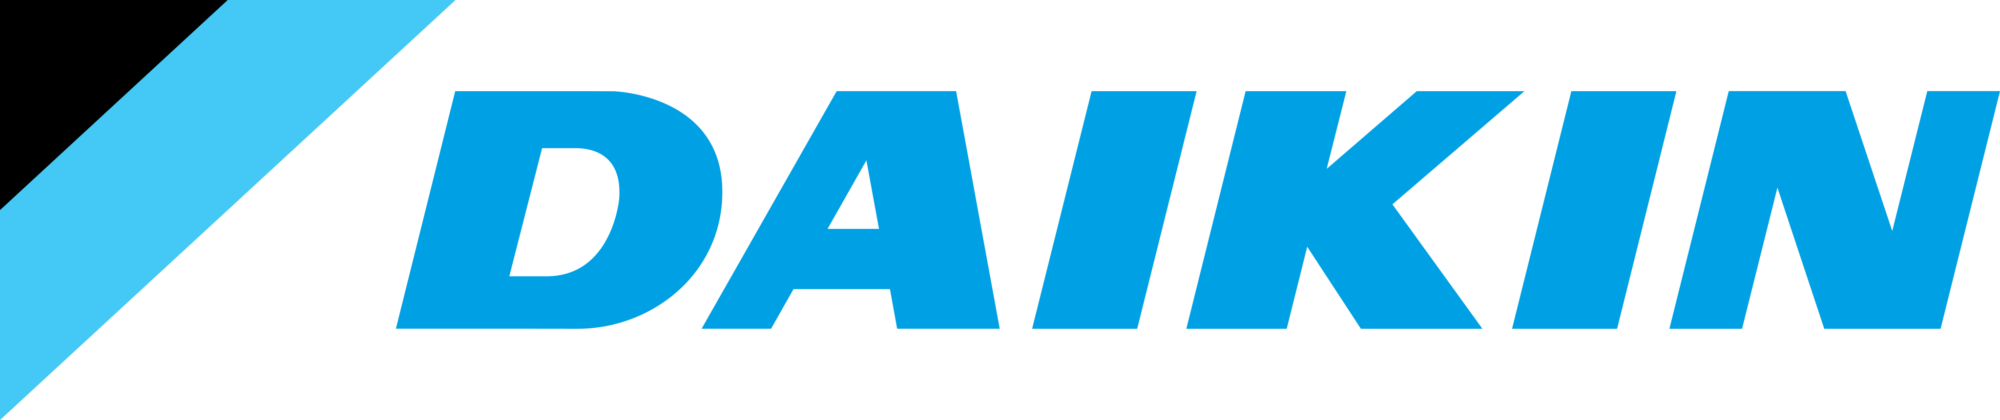 Daikin yrityksen logo